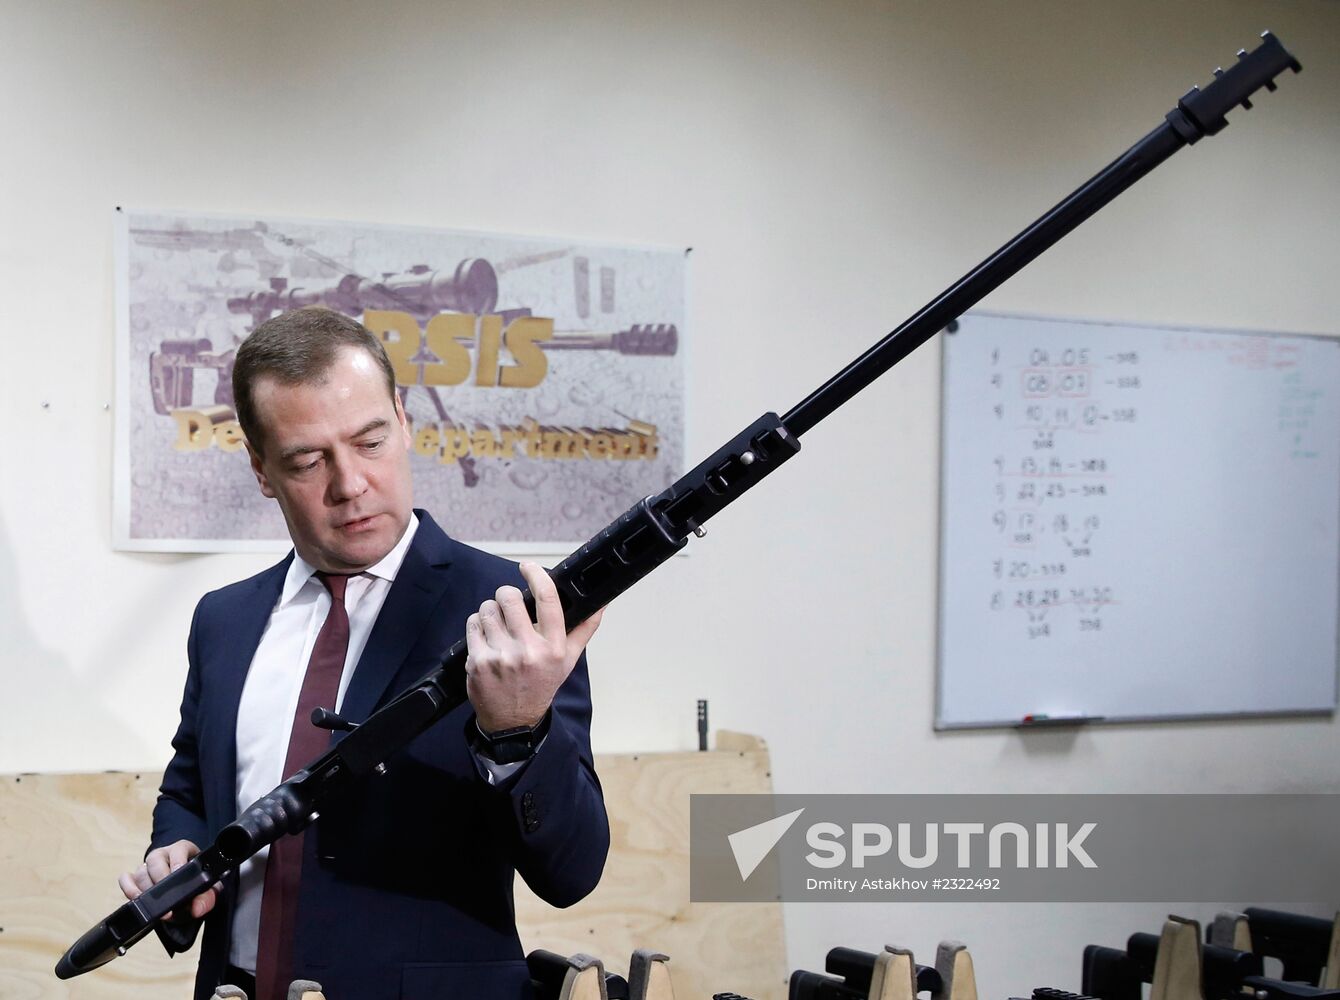 Dmitry Medvedev visits Promtechnologies Group